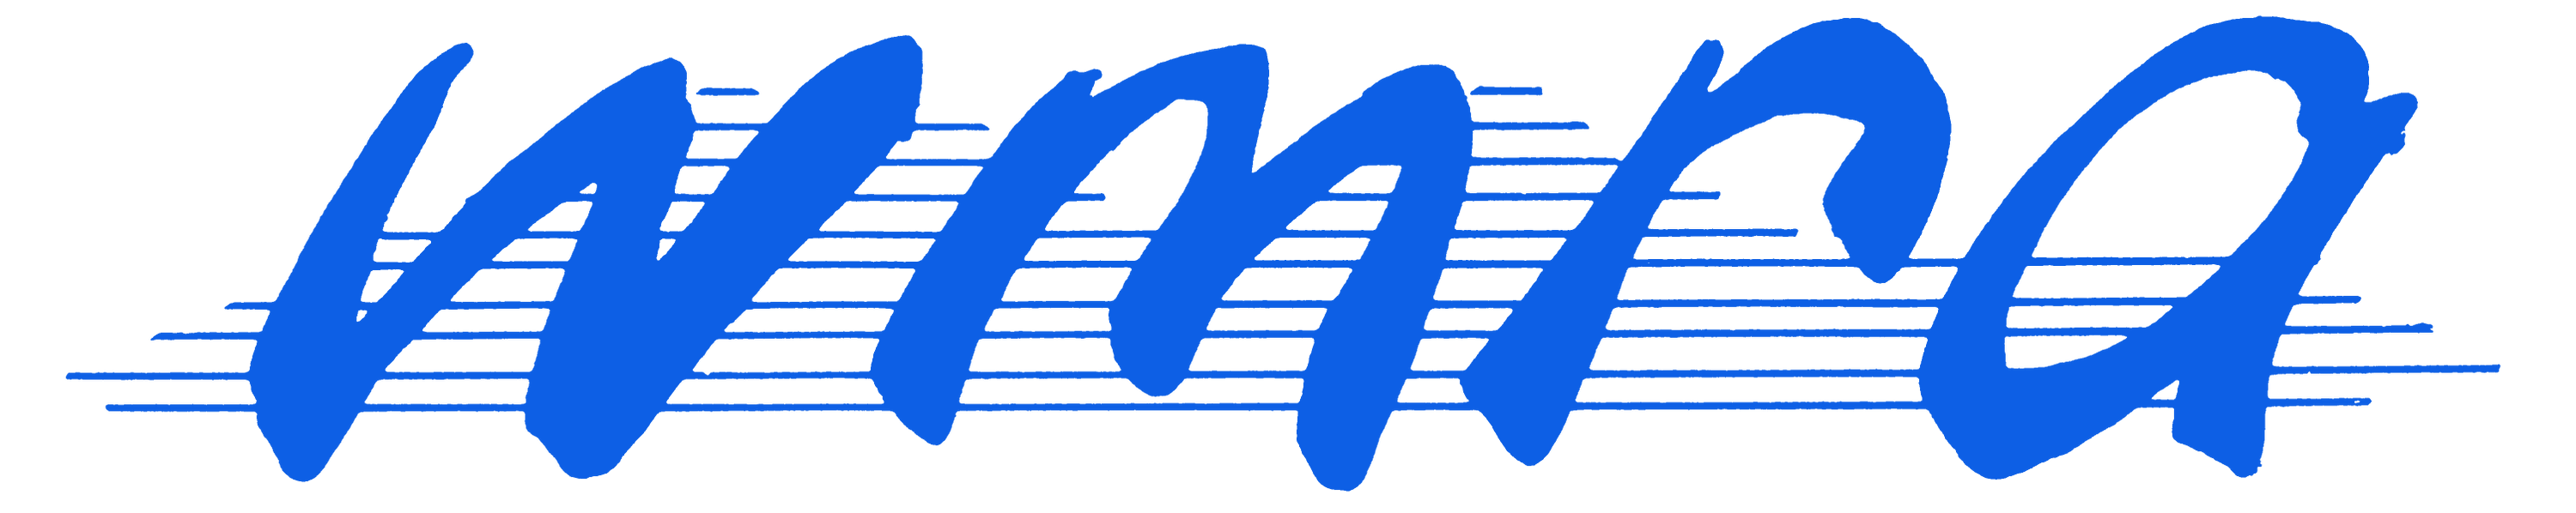 WMRA-FM